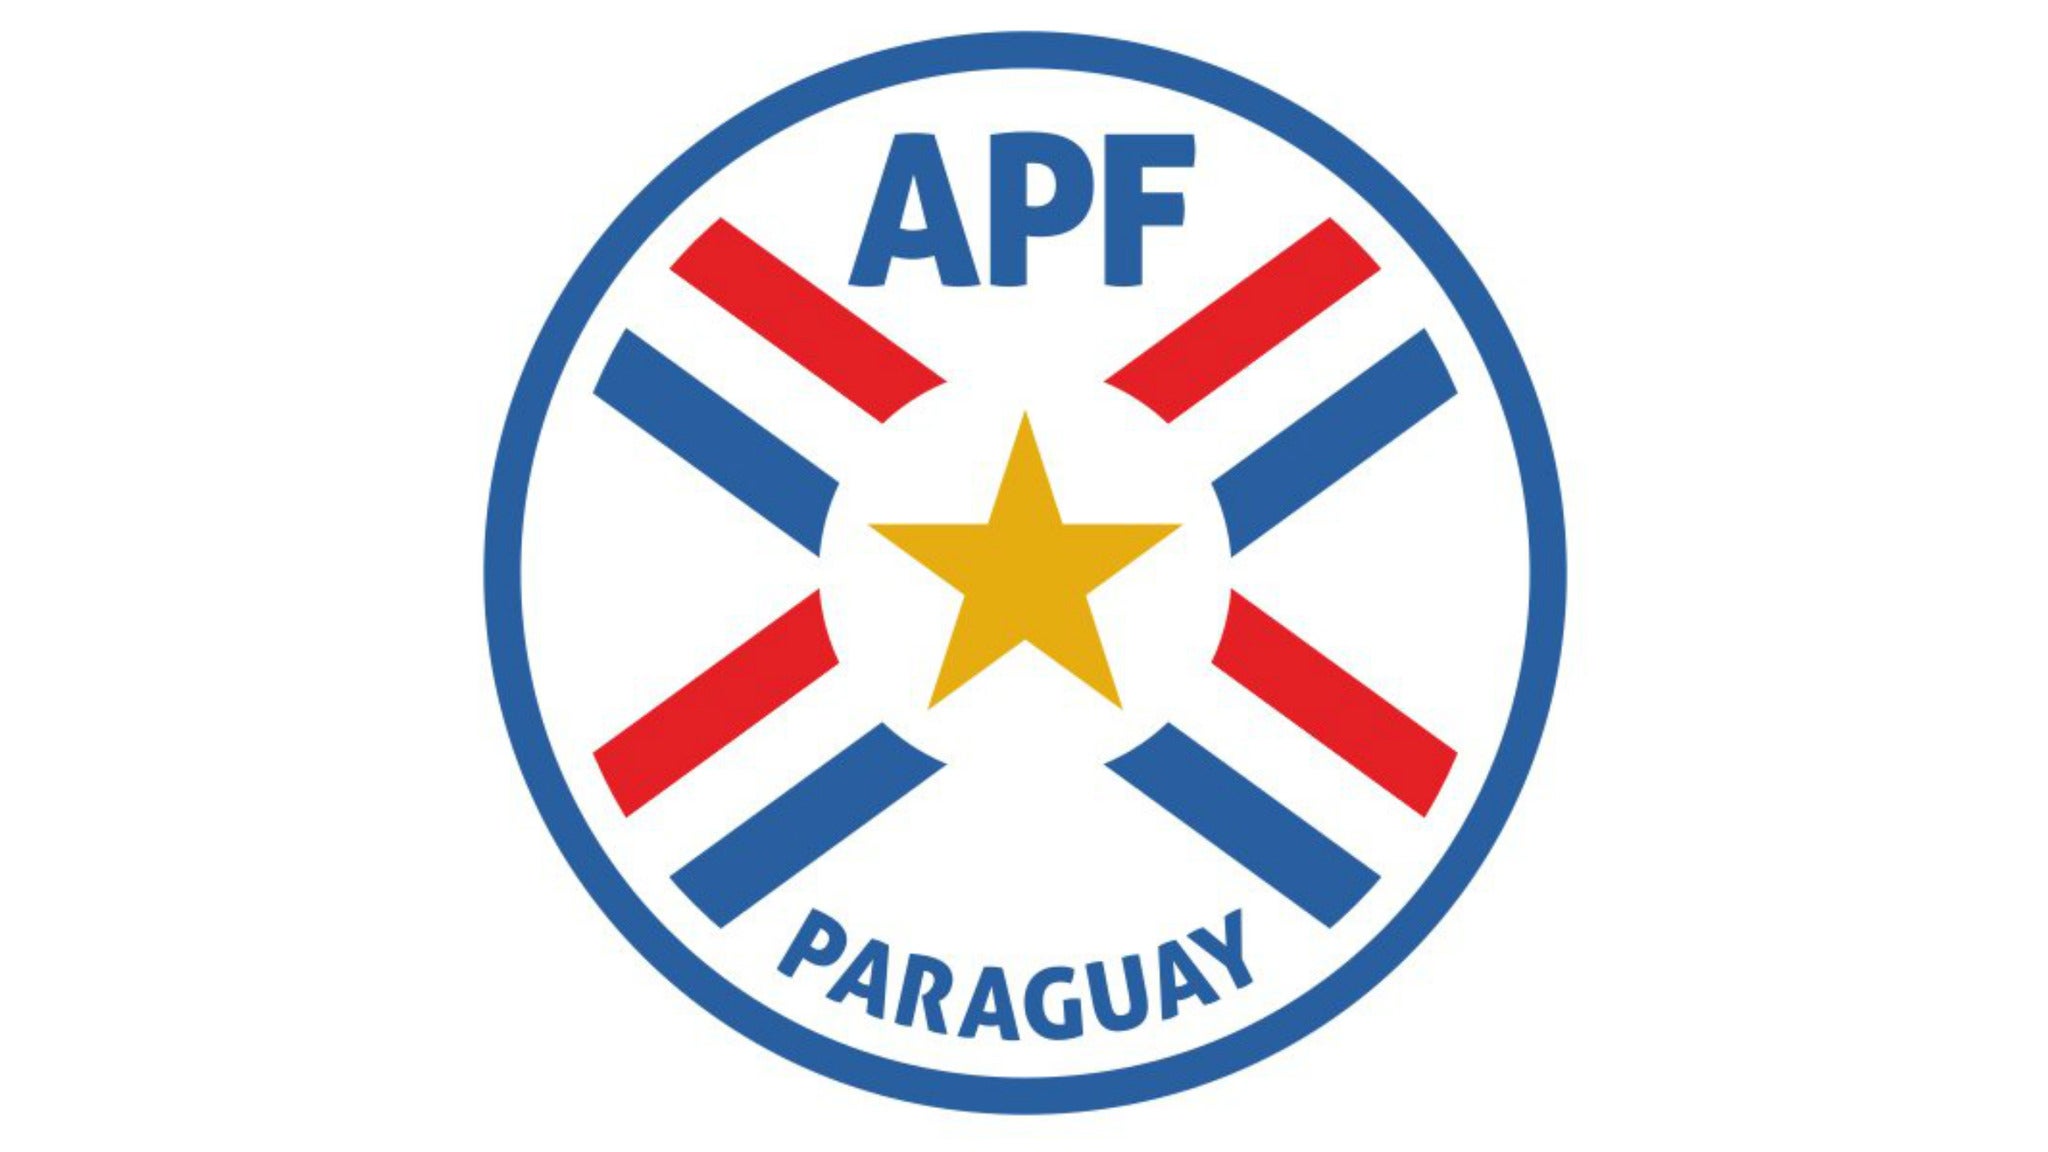 Mexico National Football Team vs. Paraguay National Football Team in Santa Clara promo photo for Internet presale offer code